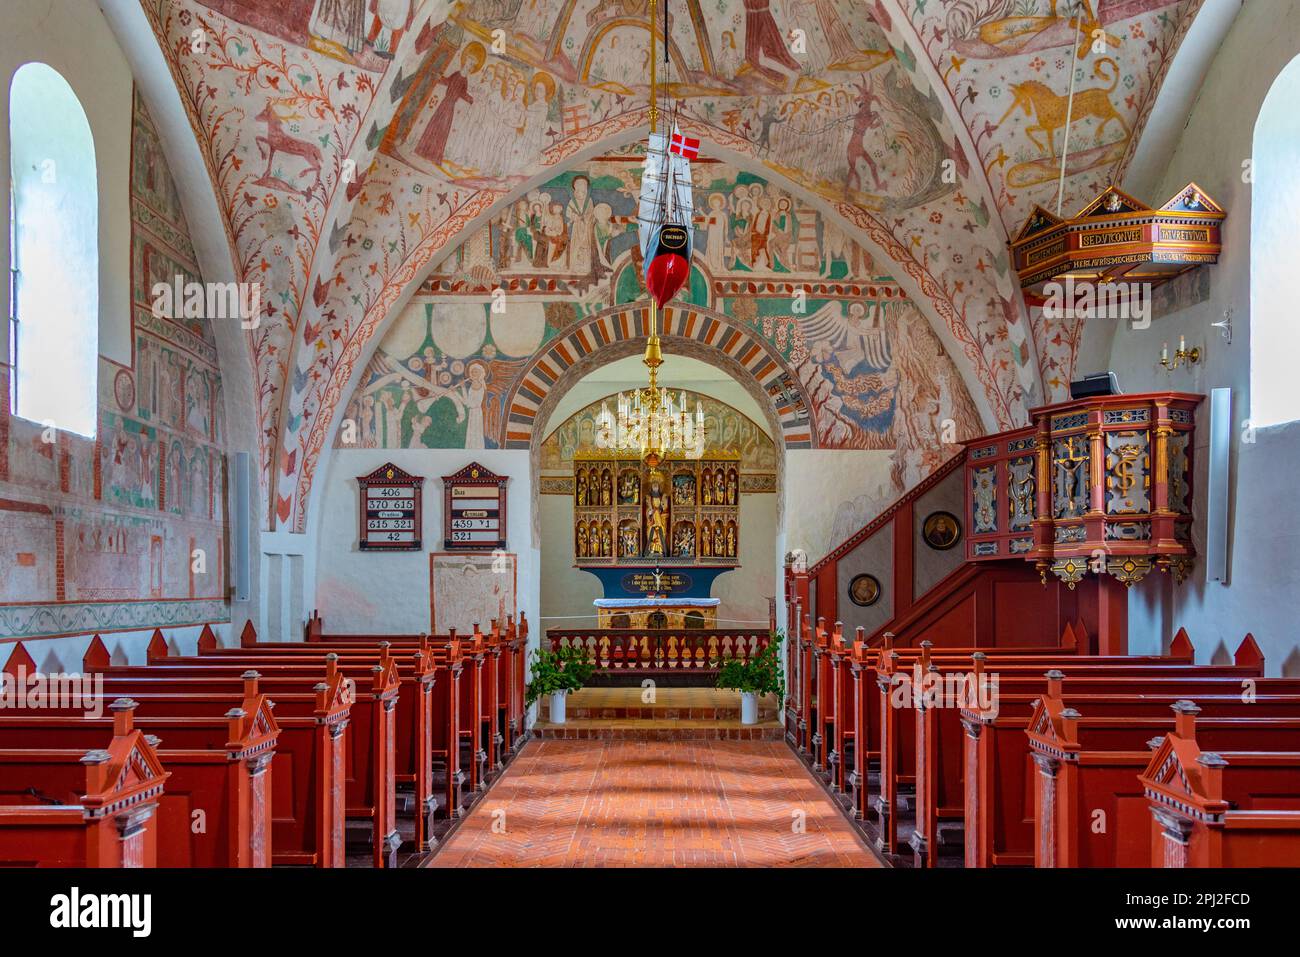 Keldby, Denmark, June 22, 2022: Interior of painted Keldby church in Denmark. Stock Photo